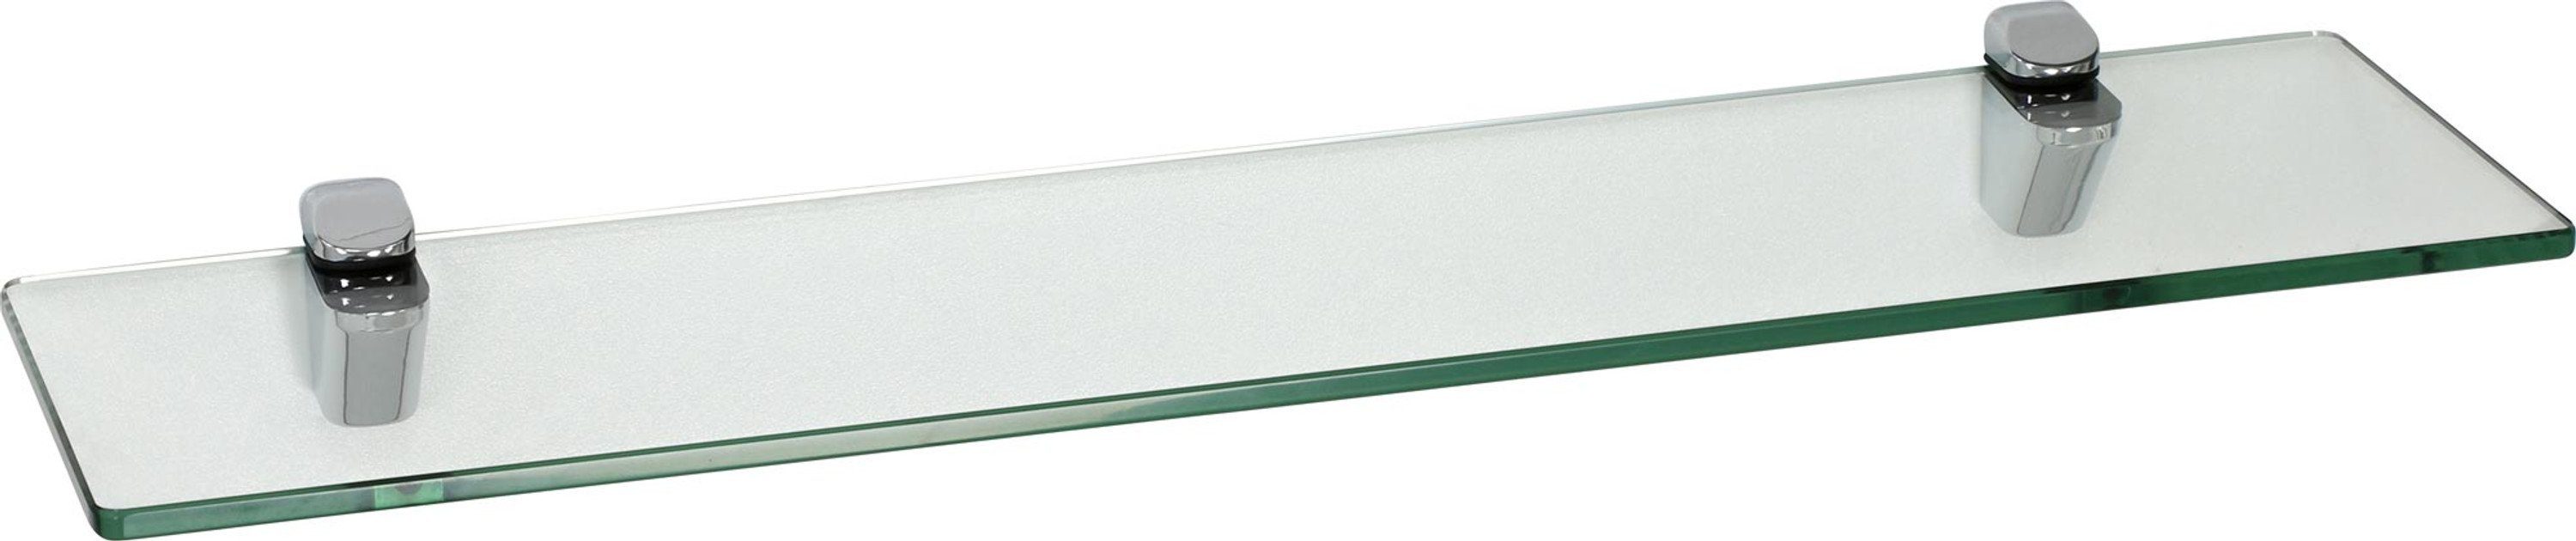 ib style Wandregal Glasregal 10mm klar 40 x 15 cm + Clip CUCALE Verchromt, Glasboden aus ESG-Sicherheitsglas - Wandregal